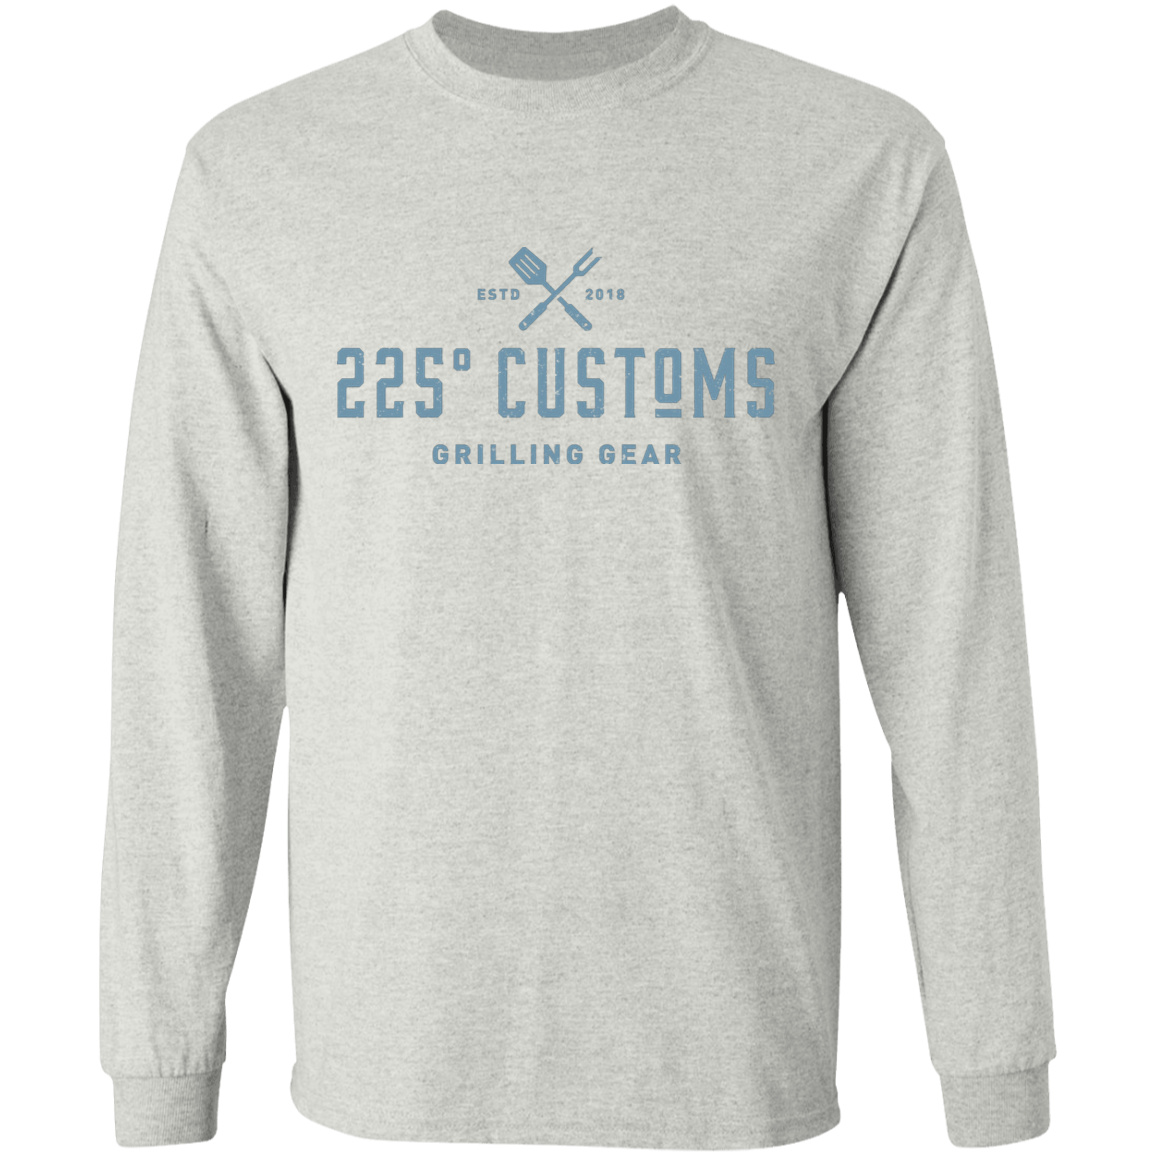 225° Customs Branded Long Sleeve